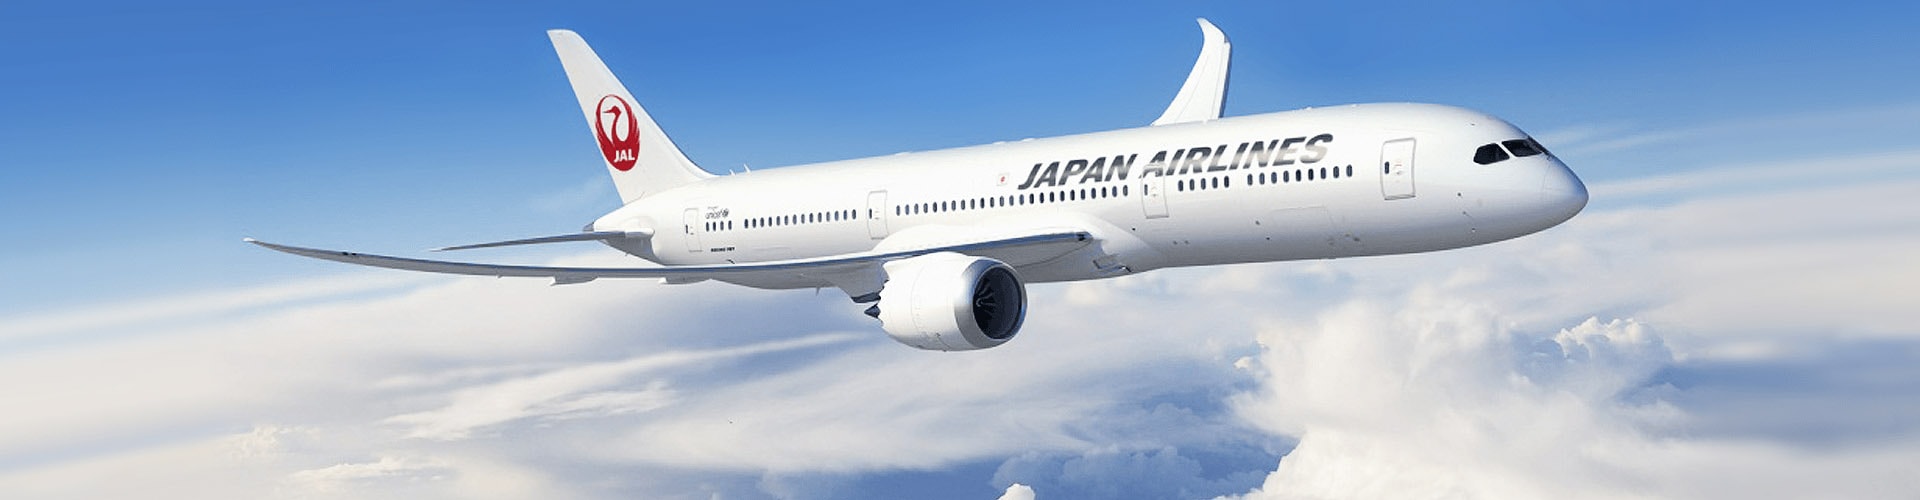 JAL 日本航空画像3